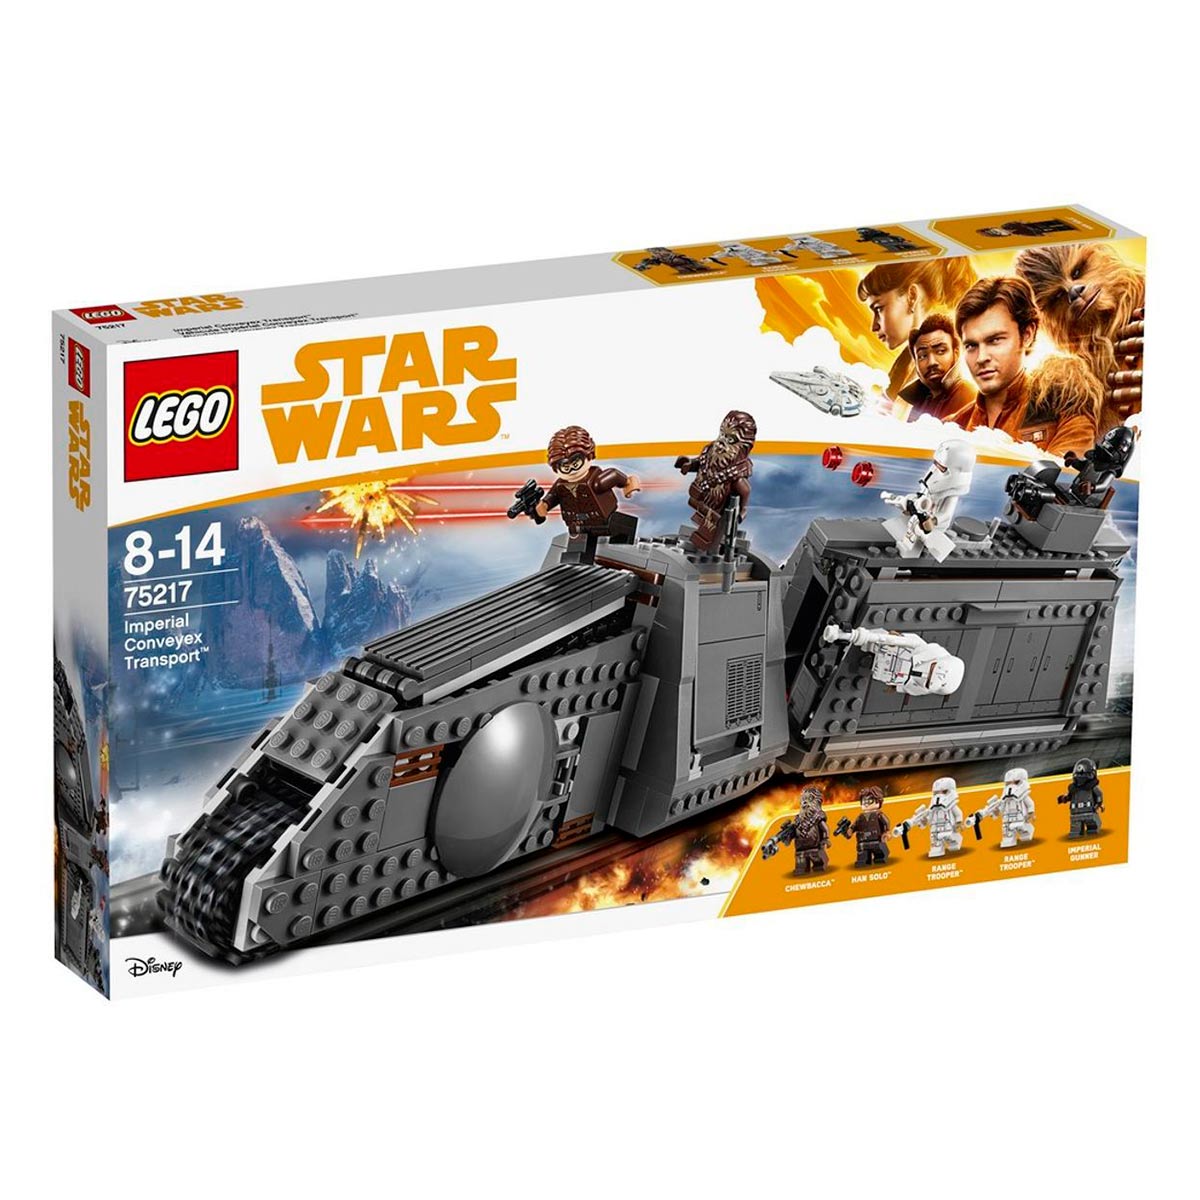 LEGO Star Wars - Transporte Imperial Conveyex - 75217